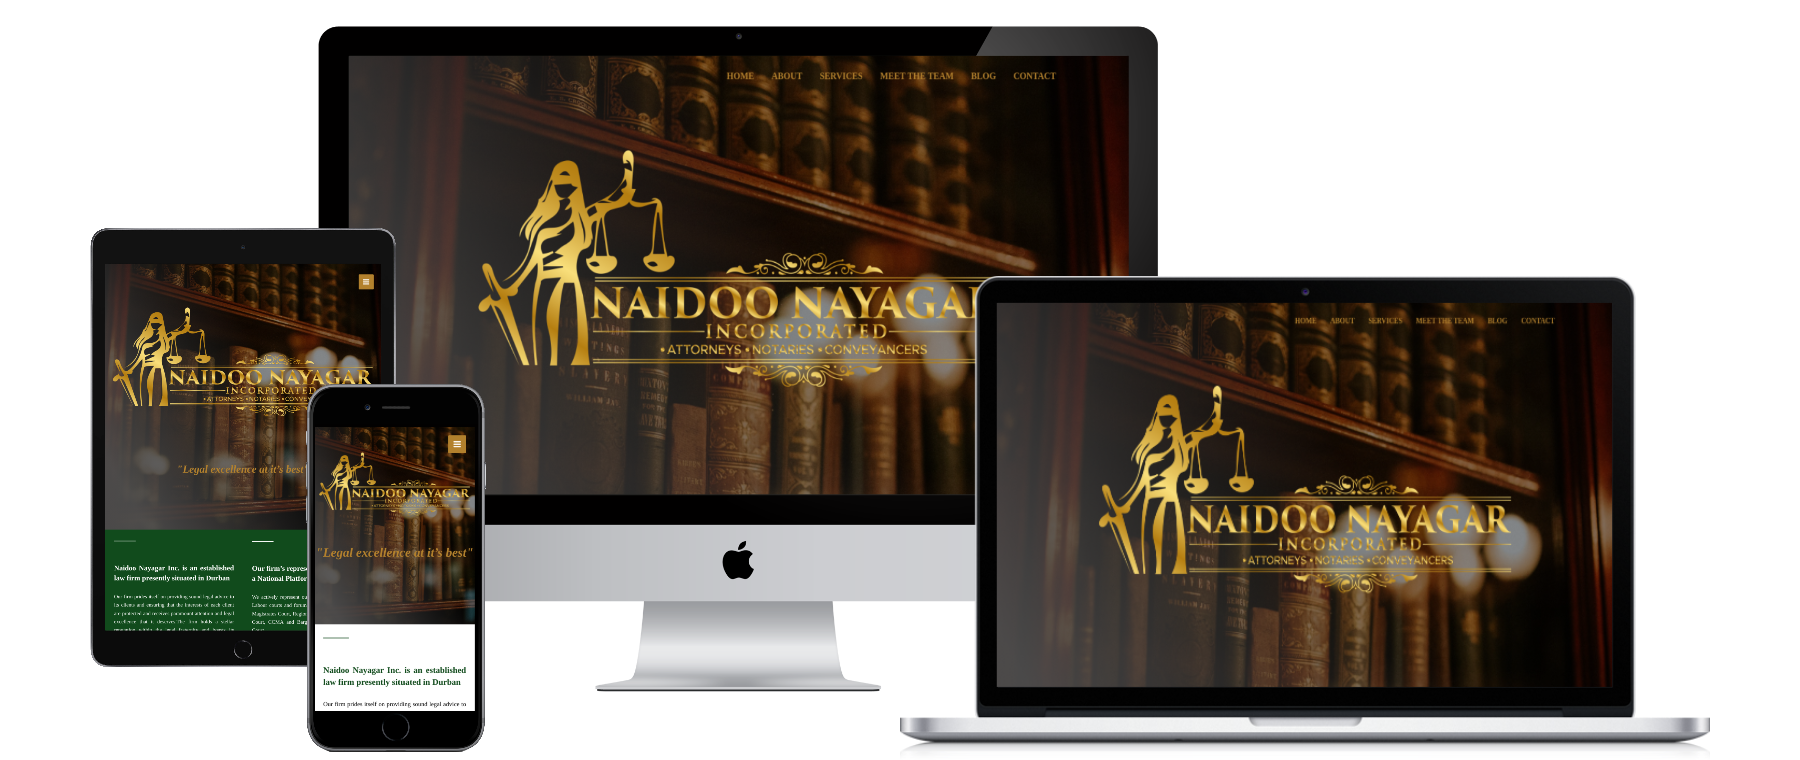 Naidoo Nayagar Incorporated